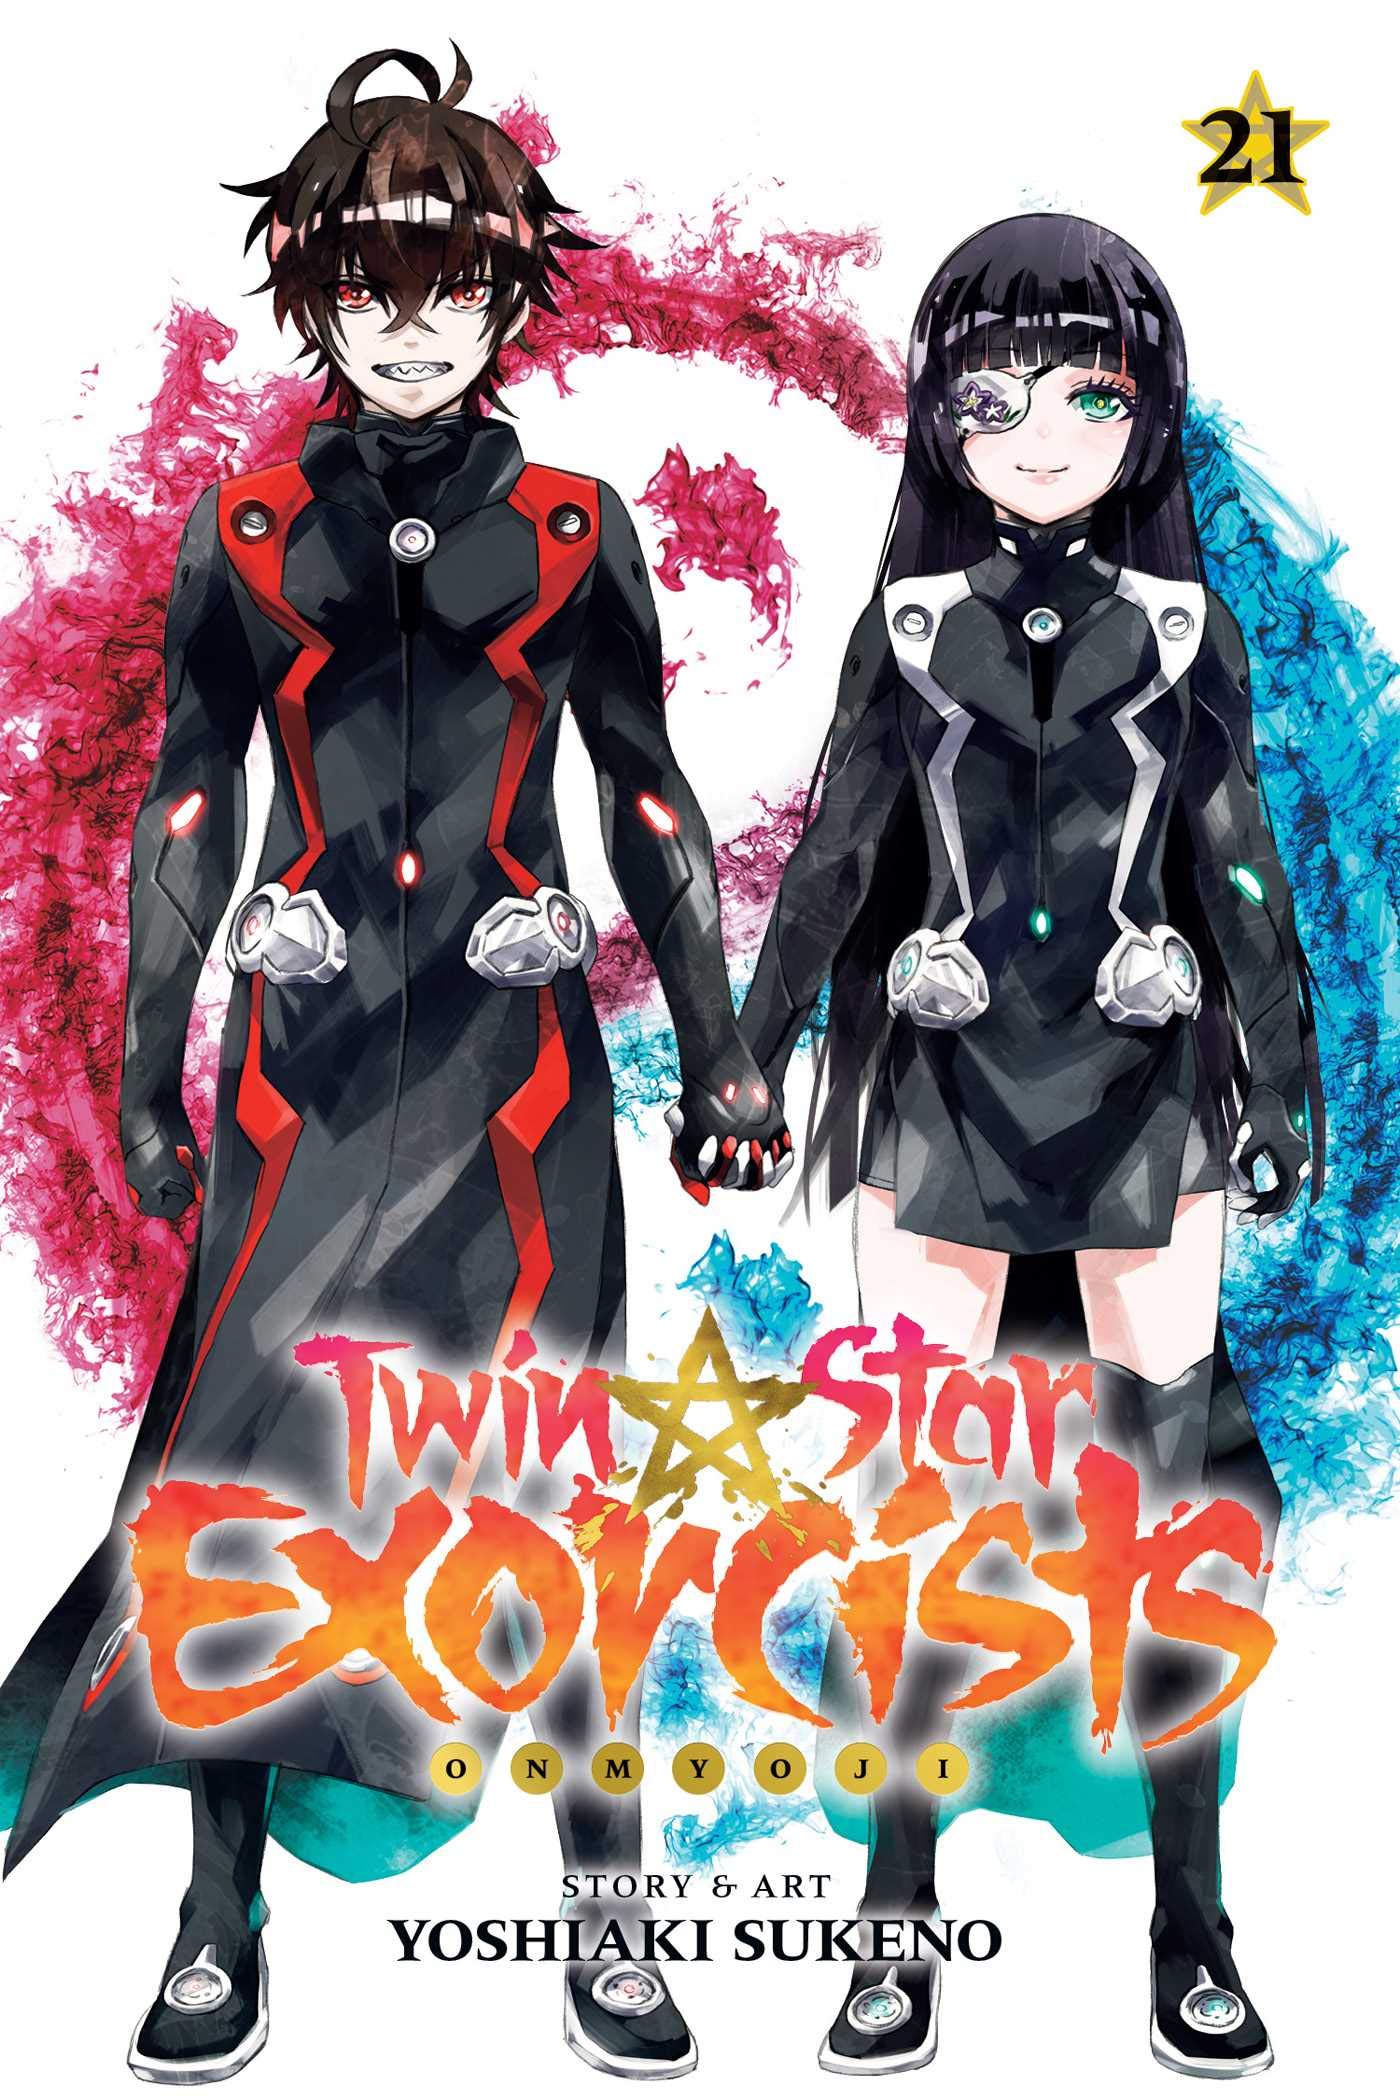 Twin Star Exorcists: Onmyoji - Volume 21